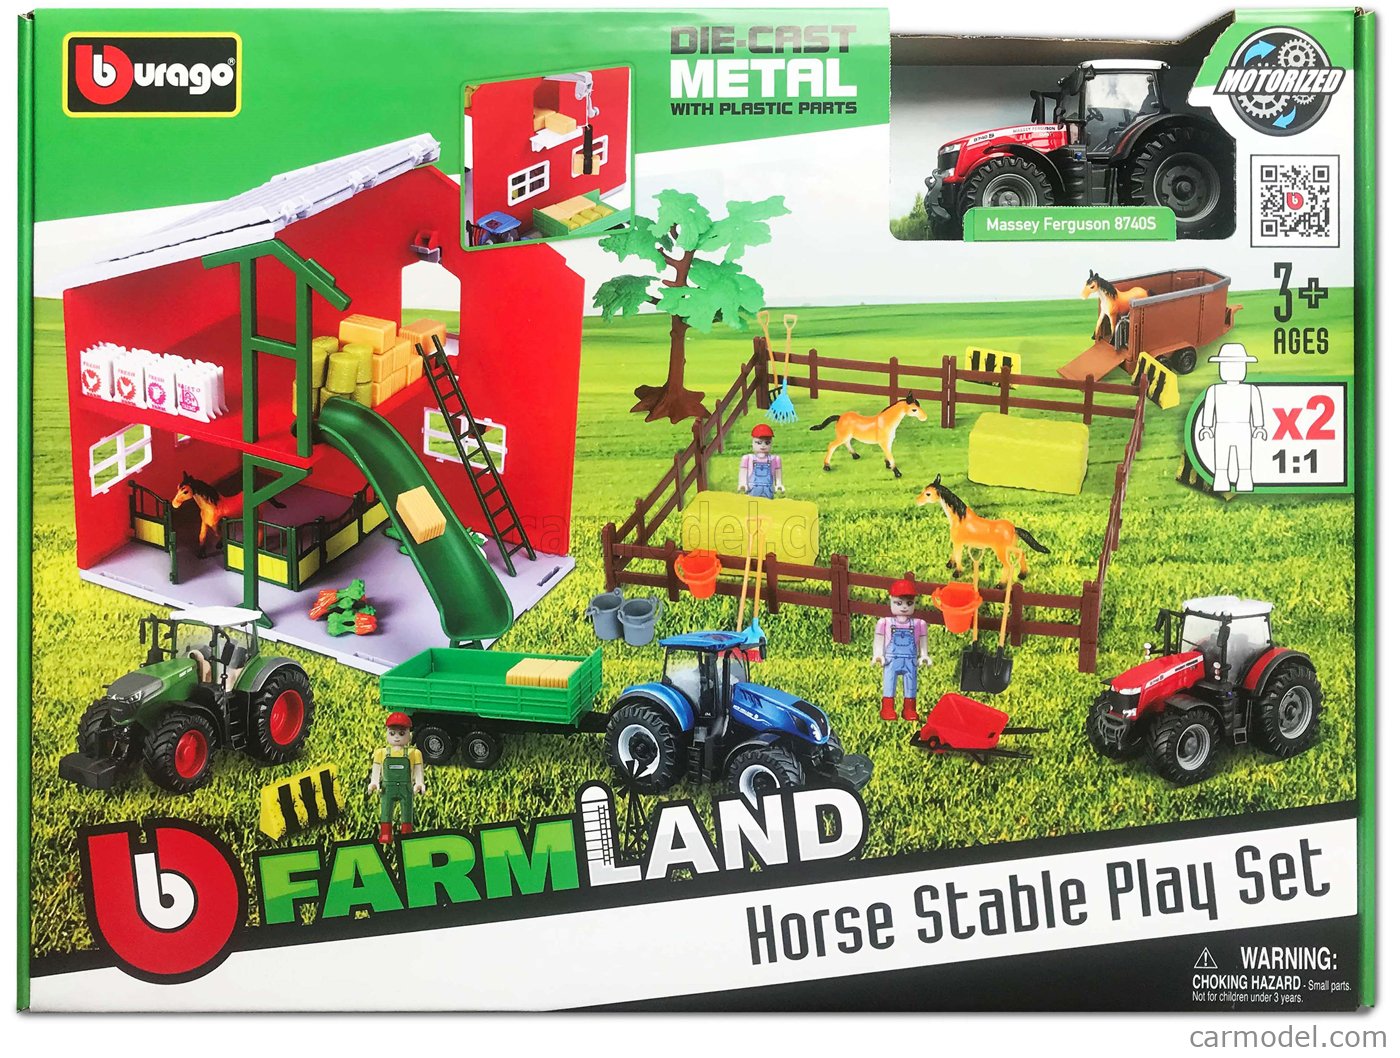 Burago Farmland Horse Stable Playset